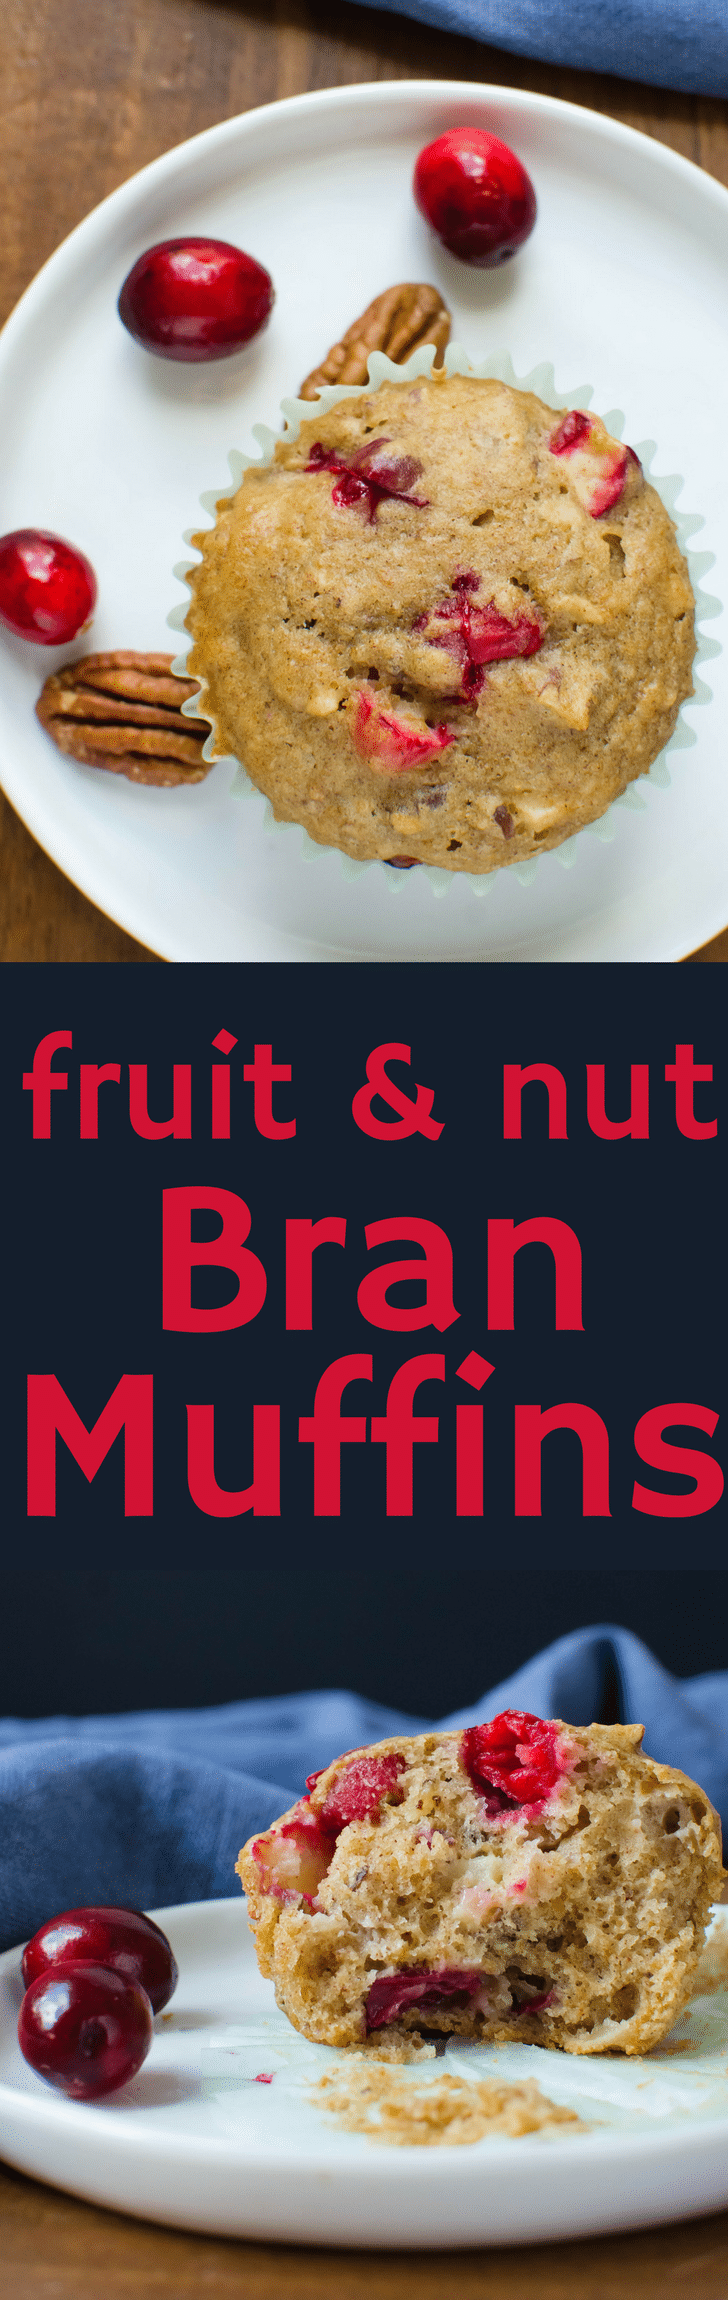 The best bran muffins recipe is here- fruit muffins - loaded w/goodies! Fruit and nut bran muffins are healthy & delish. A great raisin bran muffins recipe. #muffins #branmuffins #brunch #breakfast #apples #cranberries #raisinbran #pecans #almondmilk #eggs #healthybreakfast #christmas #newyearsday #easterbrunch #christmasbrunch #mothersday #bakingmuffins #muffinrecipe #branmuffinrecipe 